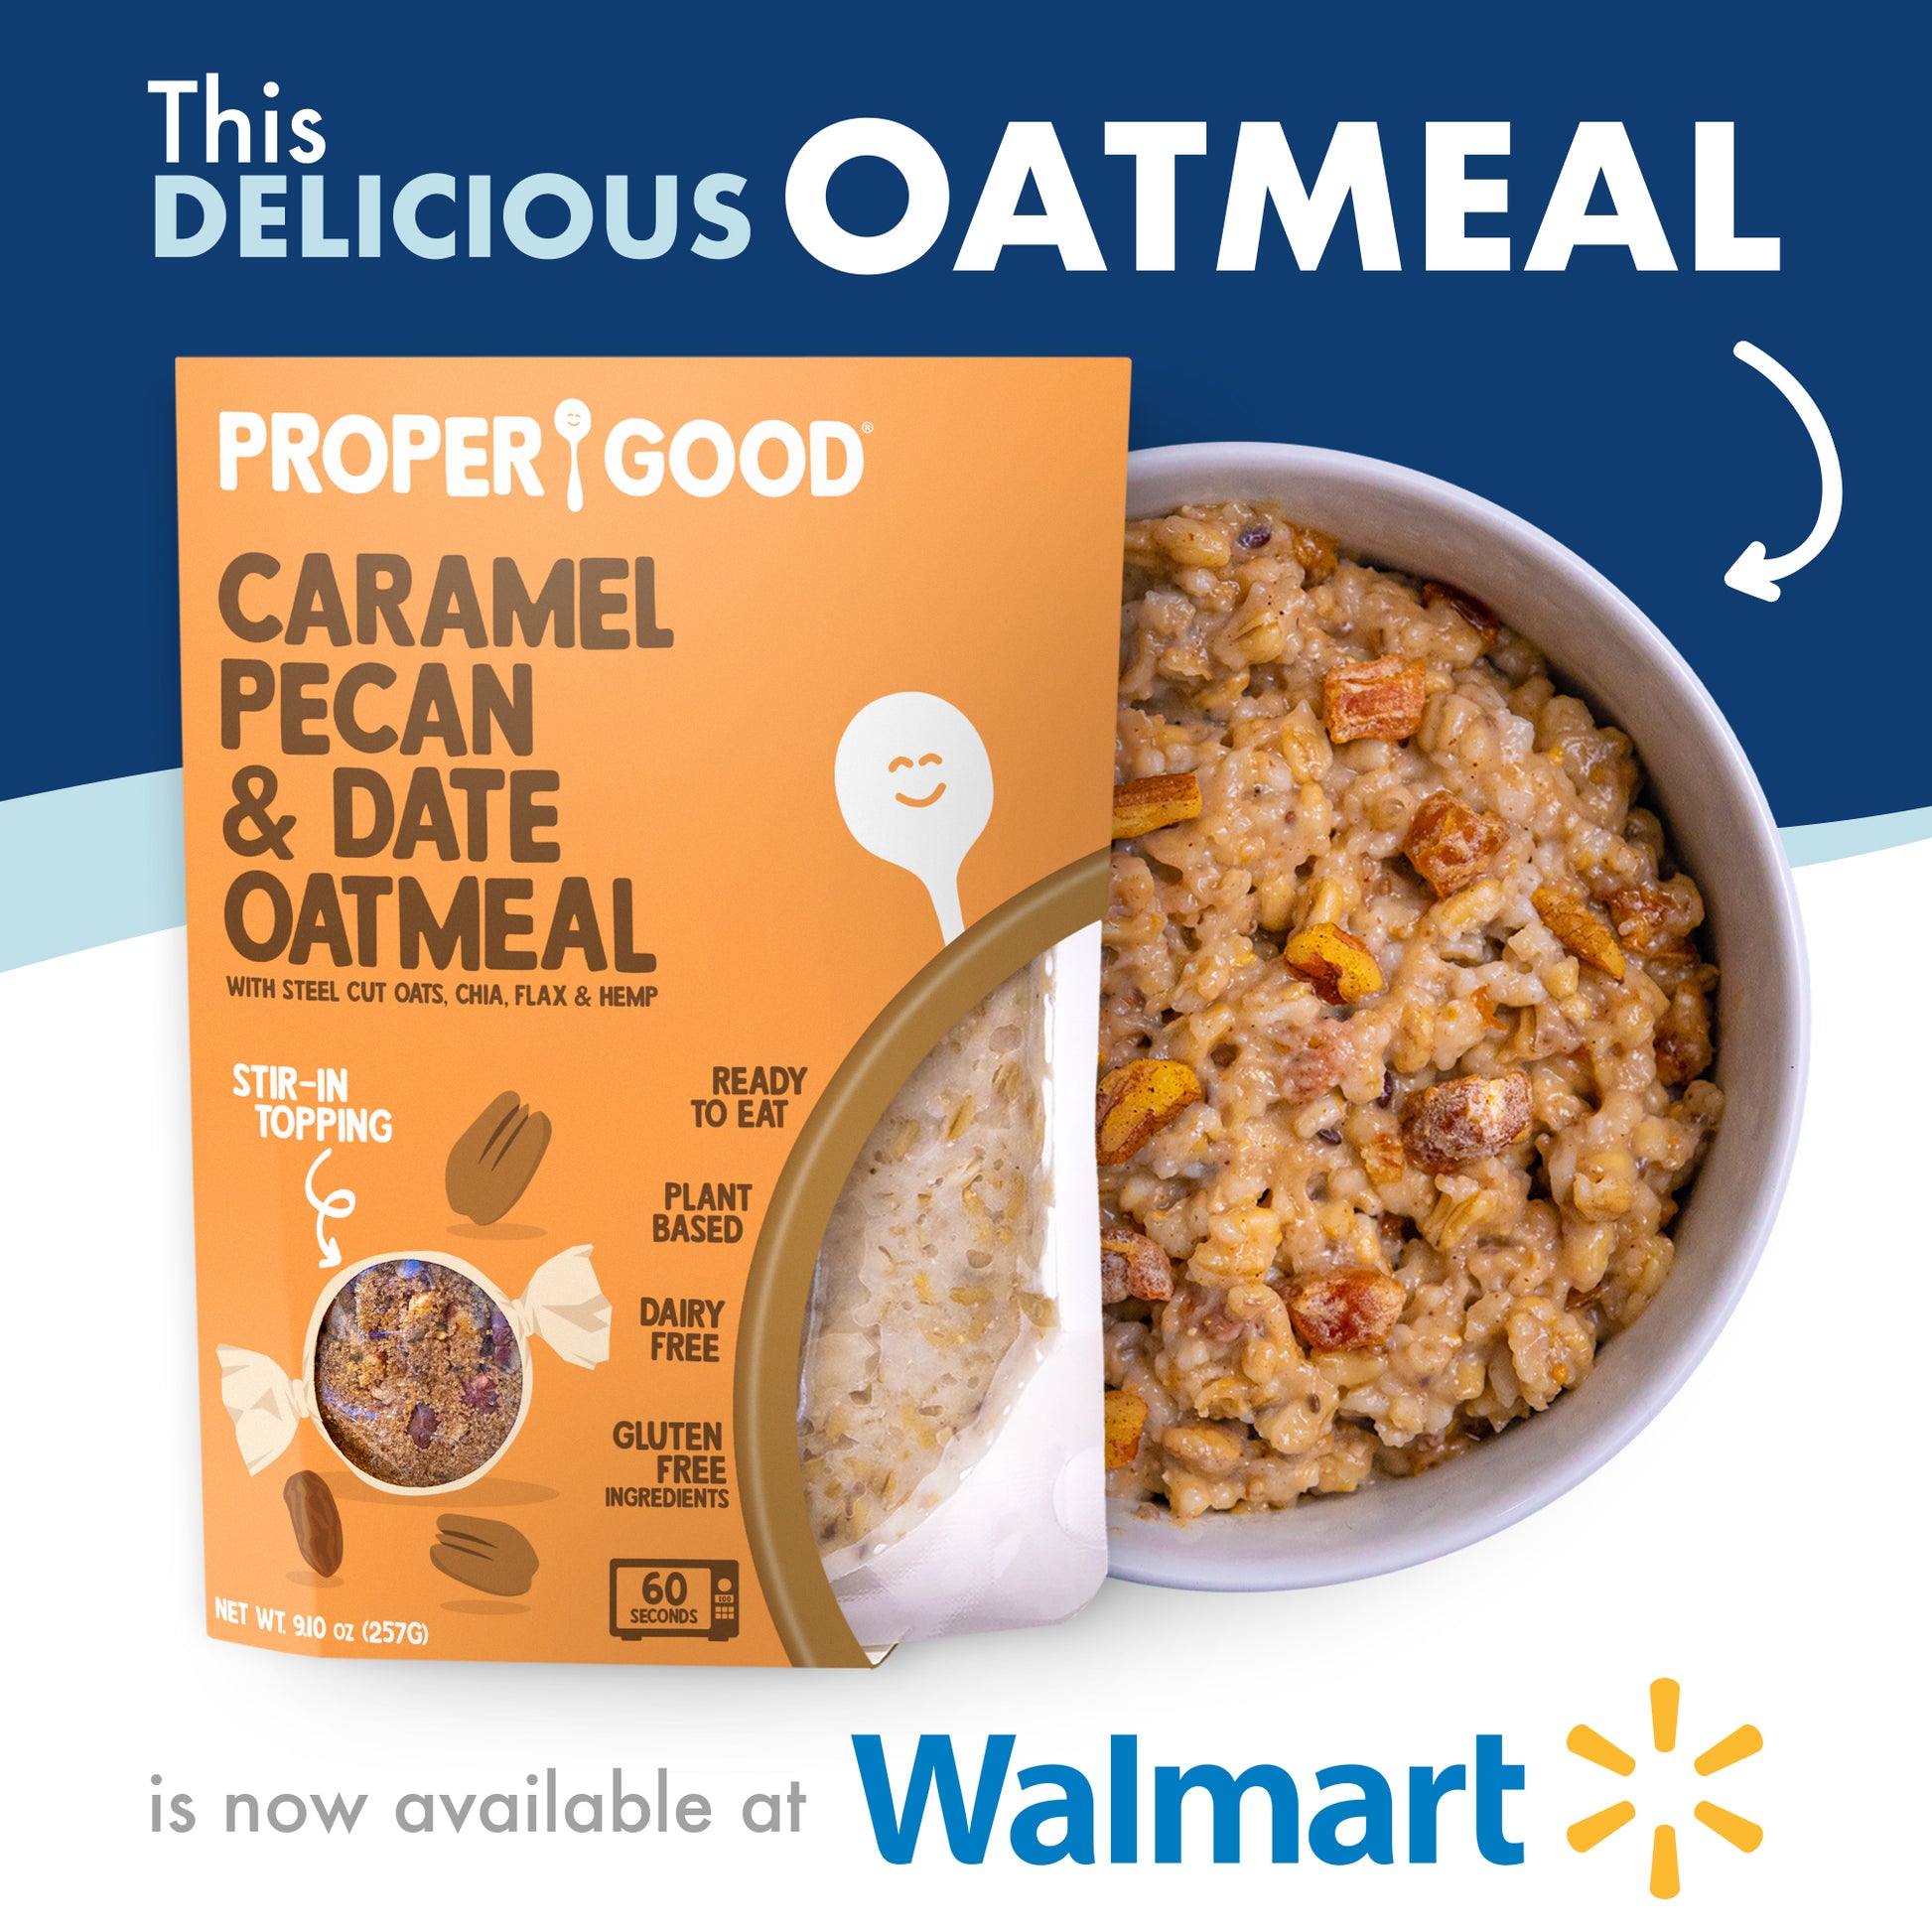 Caramel Pecan & Date Oatmeal available in Walmart - Eat Proper Good